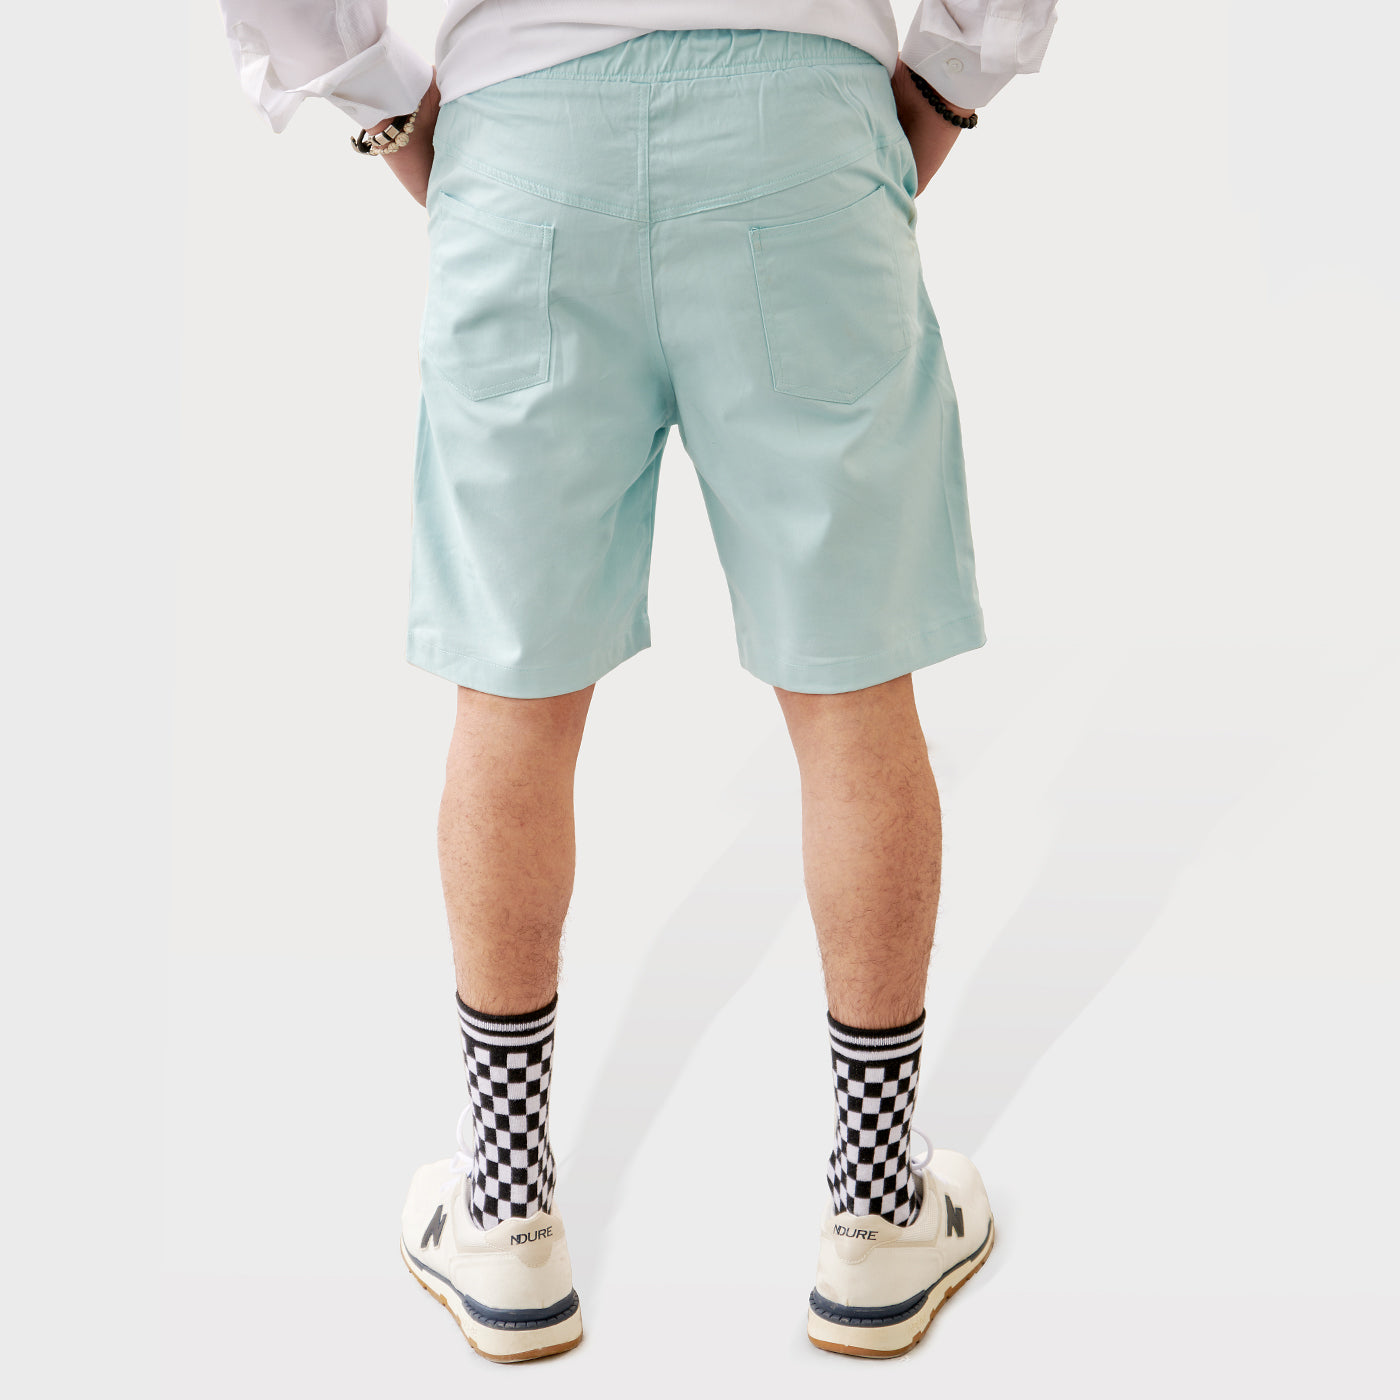 Men's Casual Chino Shorts